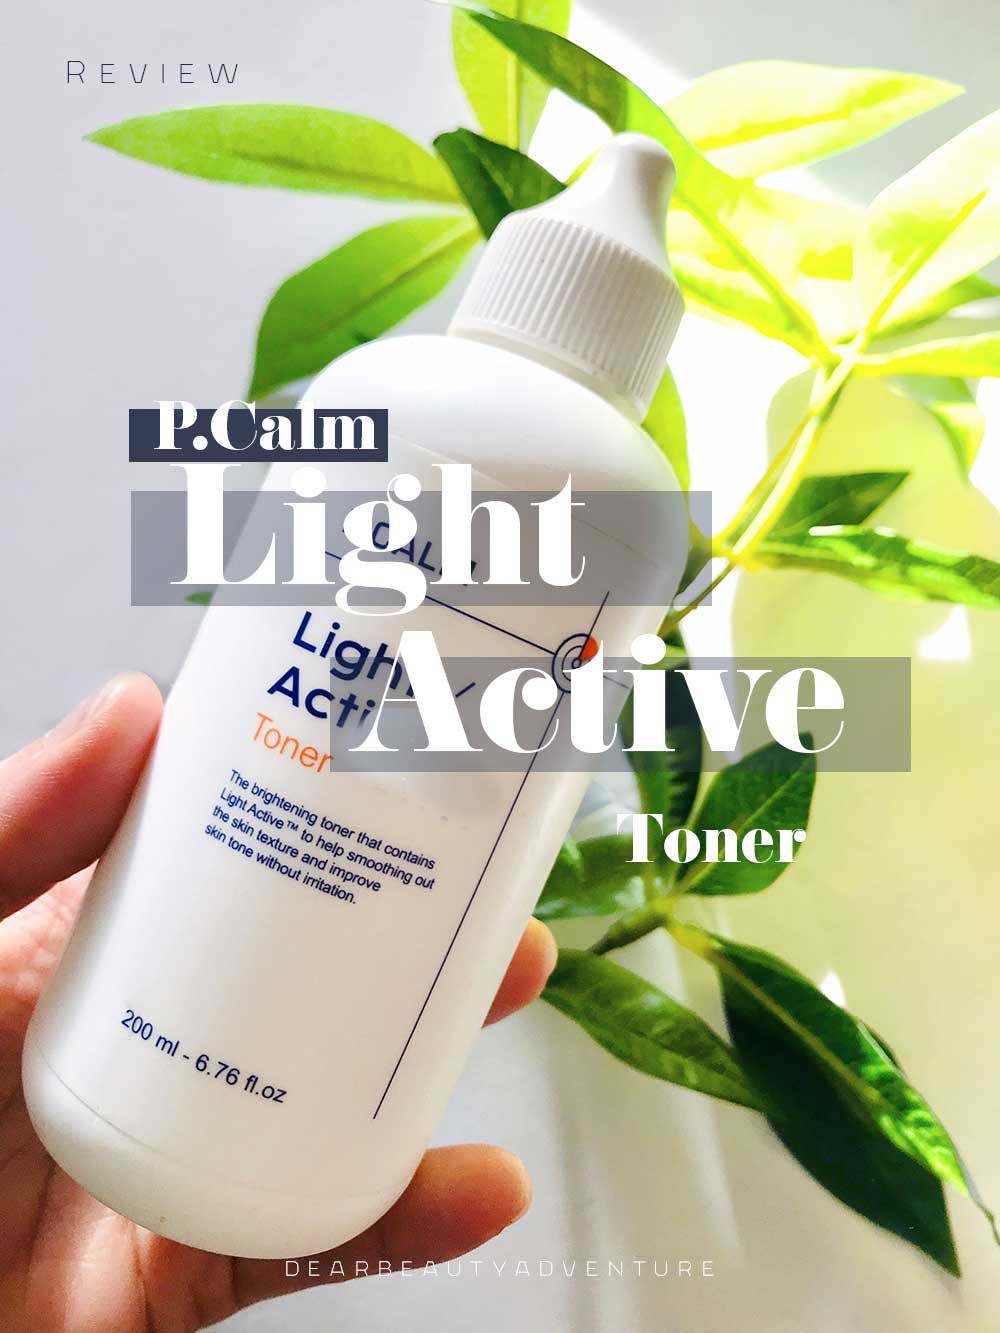 p calm light active toner review